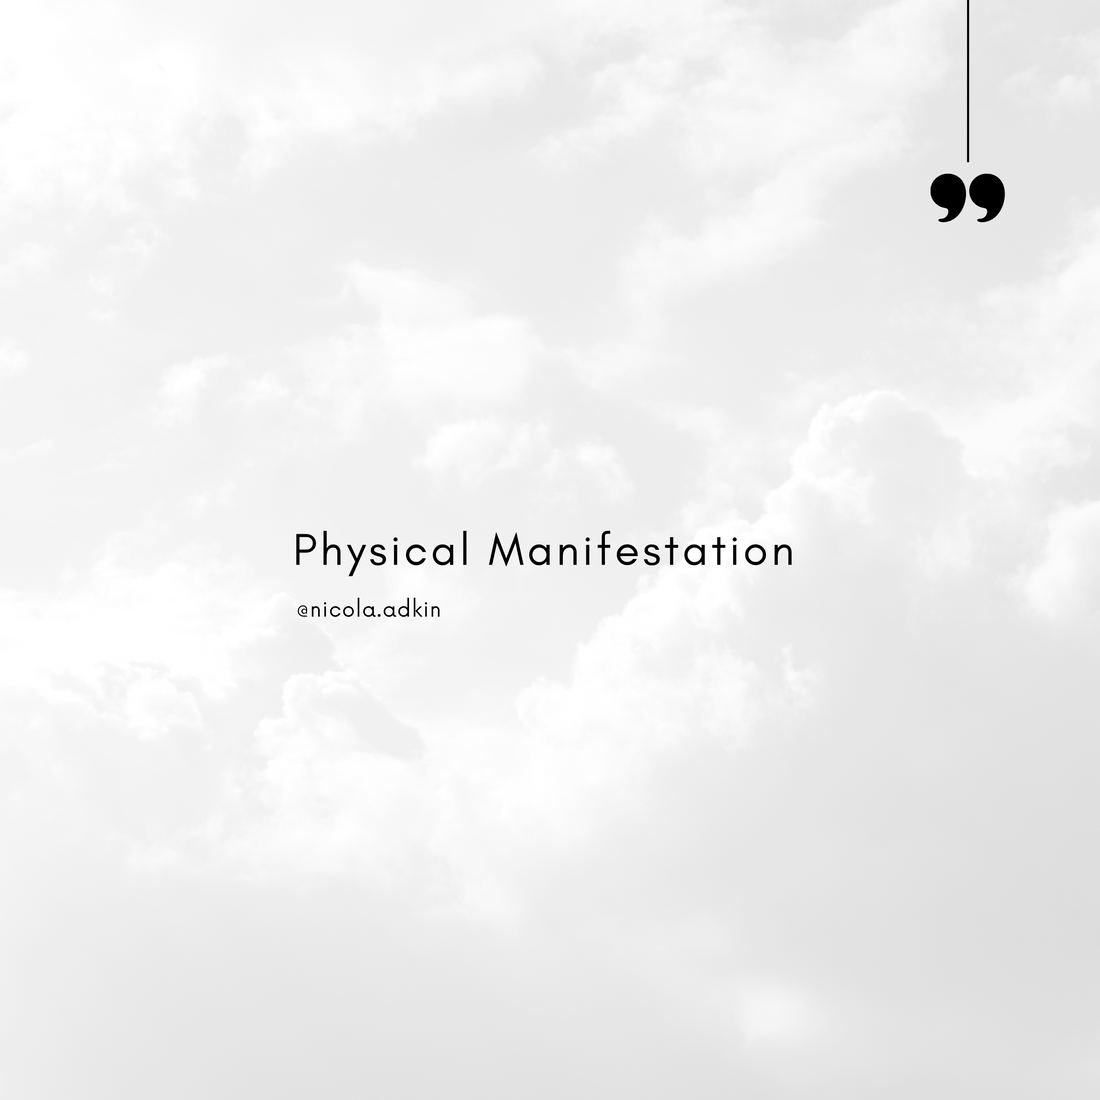 Physical Manifestation